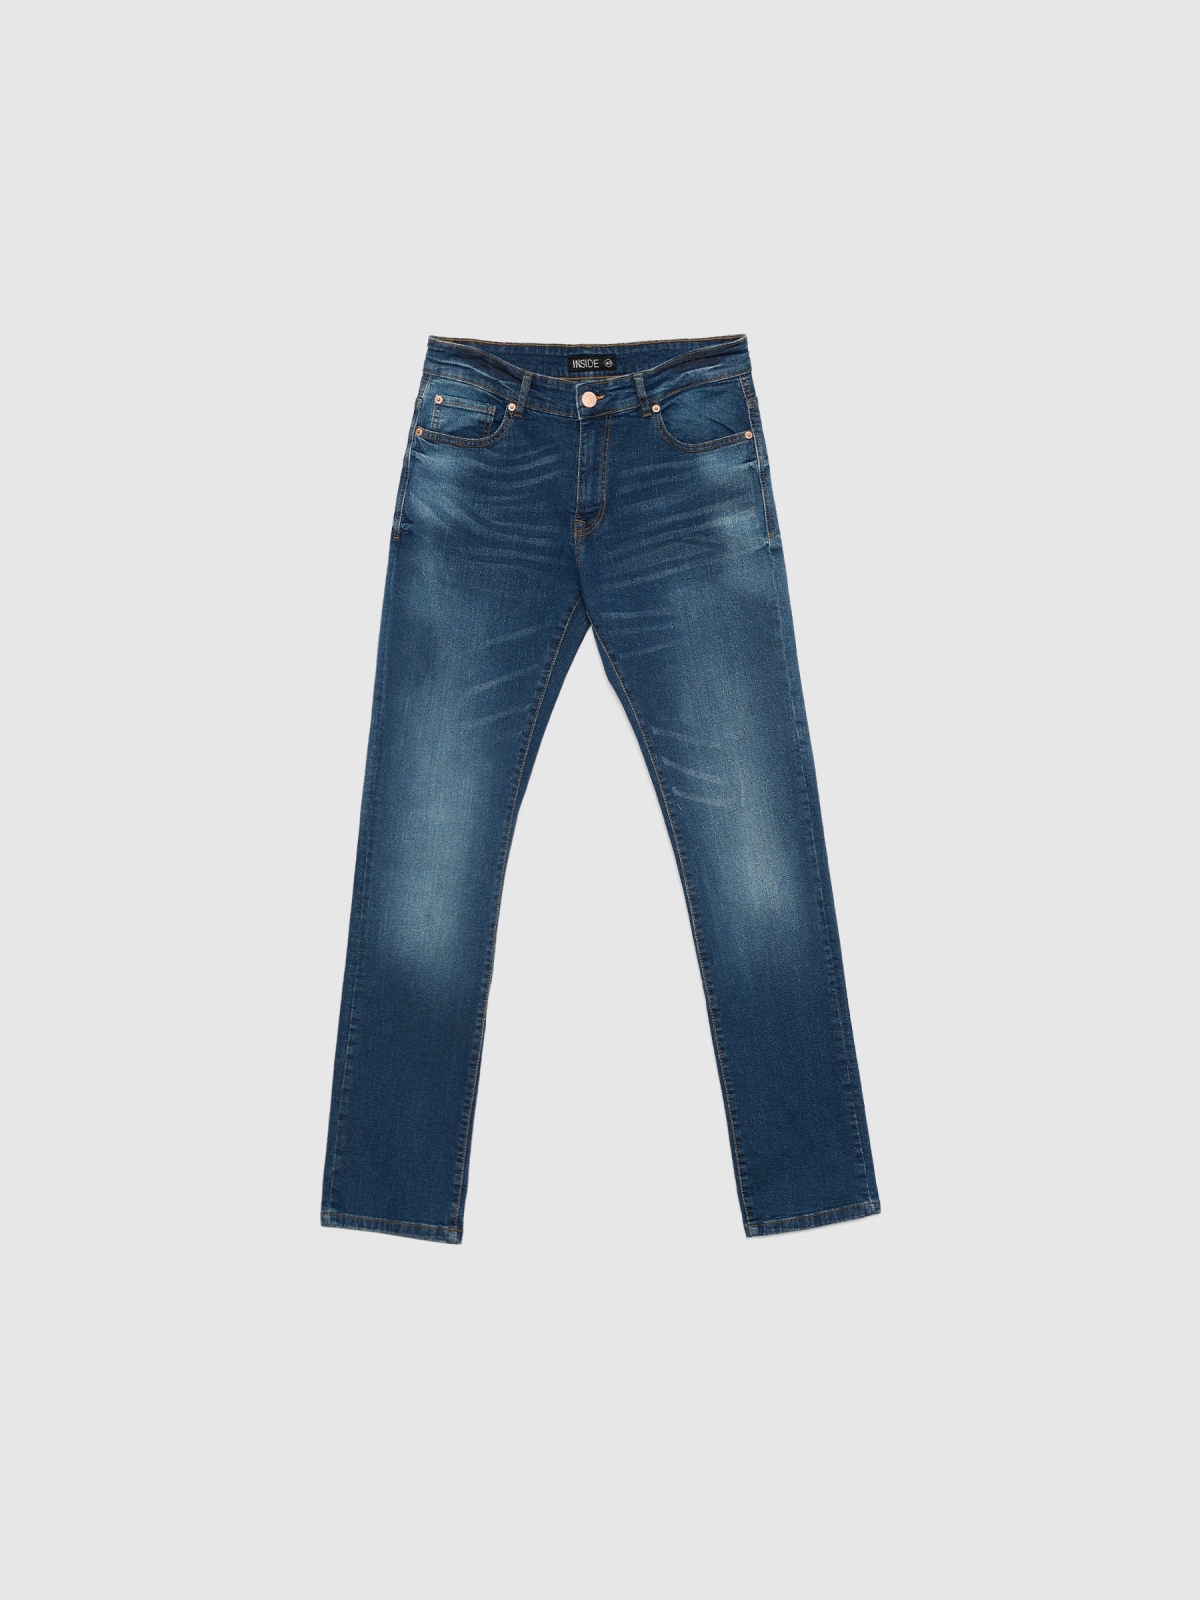  Jeans regular básicos azul oscuro